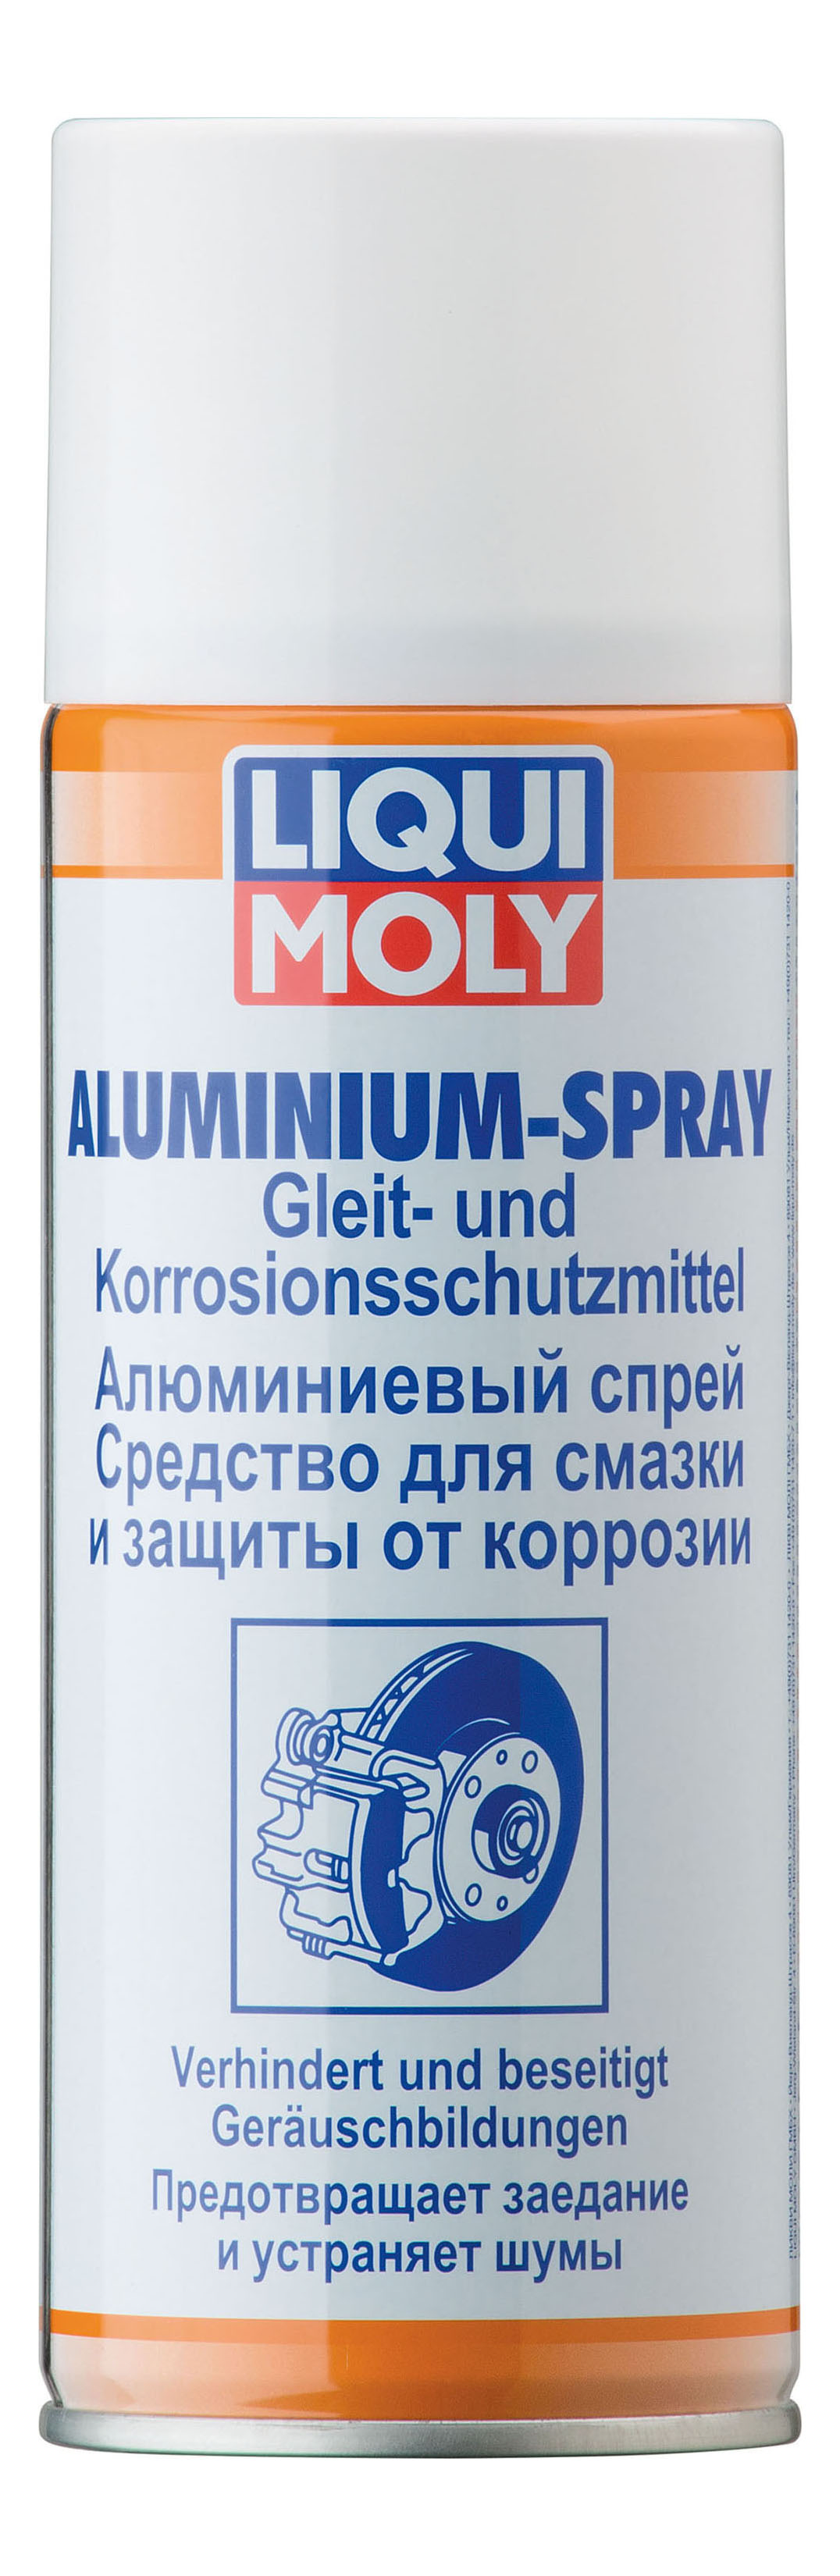 фото Liquimoly aluminium-spray 0.4l_алюминевый спрей liqui moly 7533